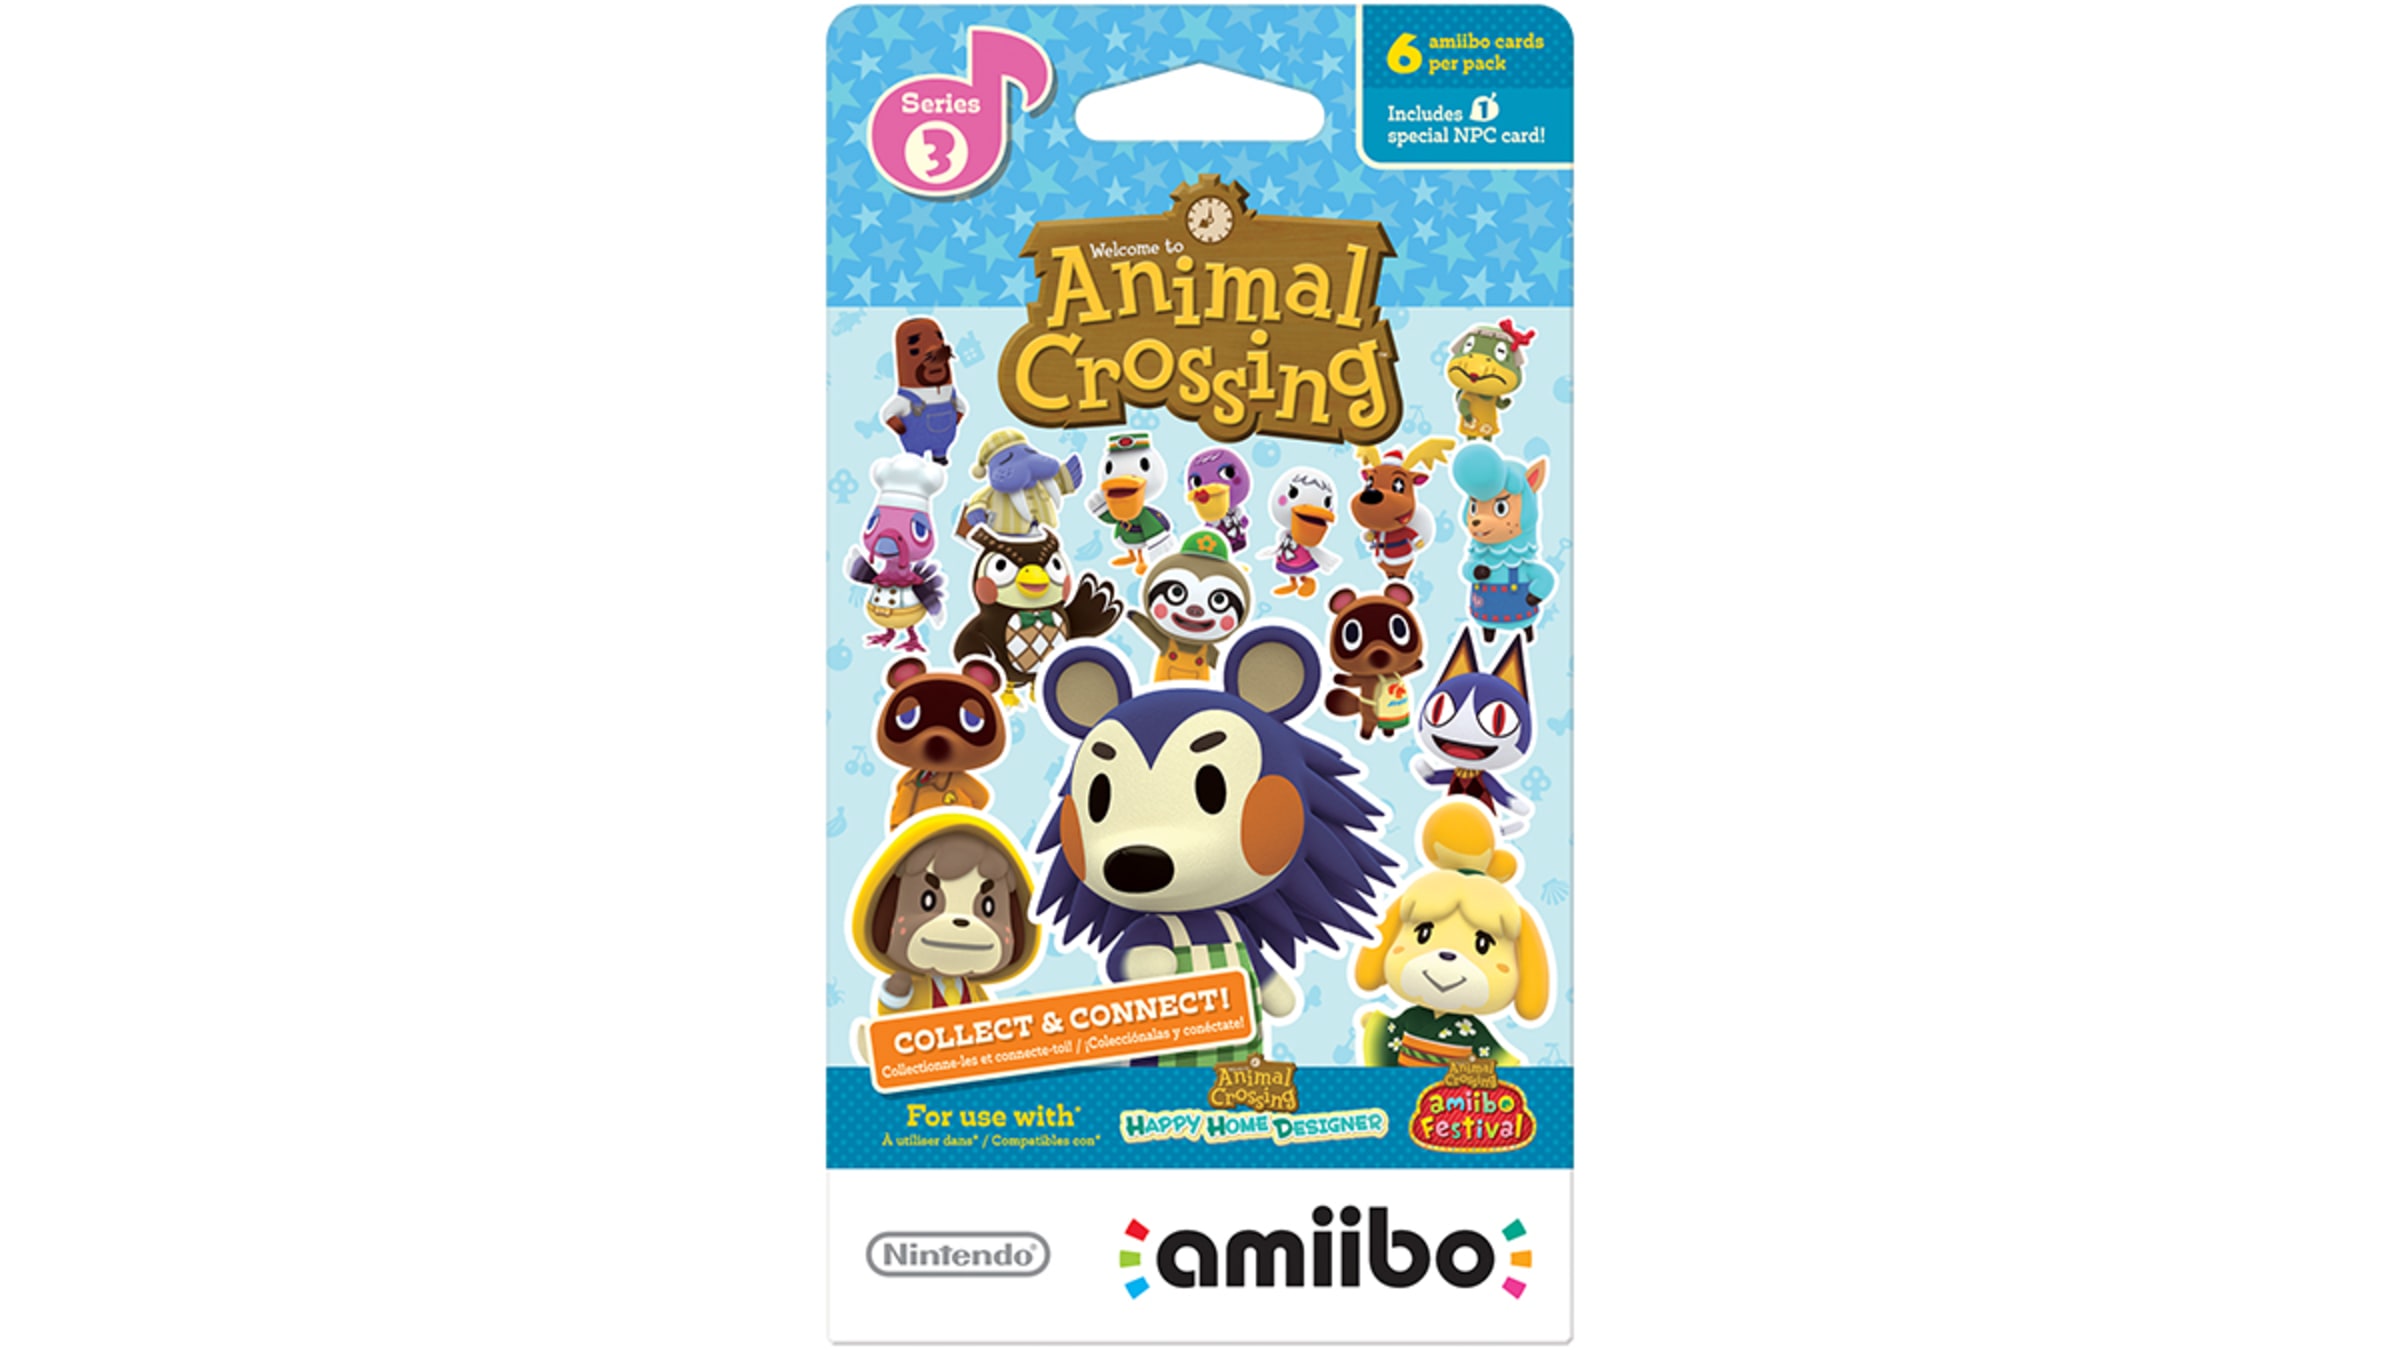 Animal Crossing amiibo Cards - Series 3 - Nintendo Official Site